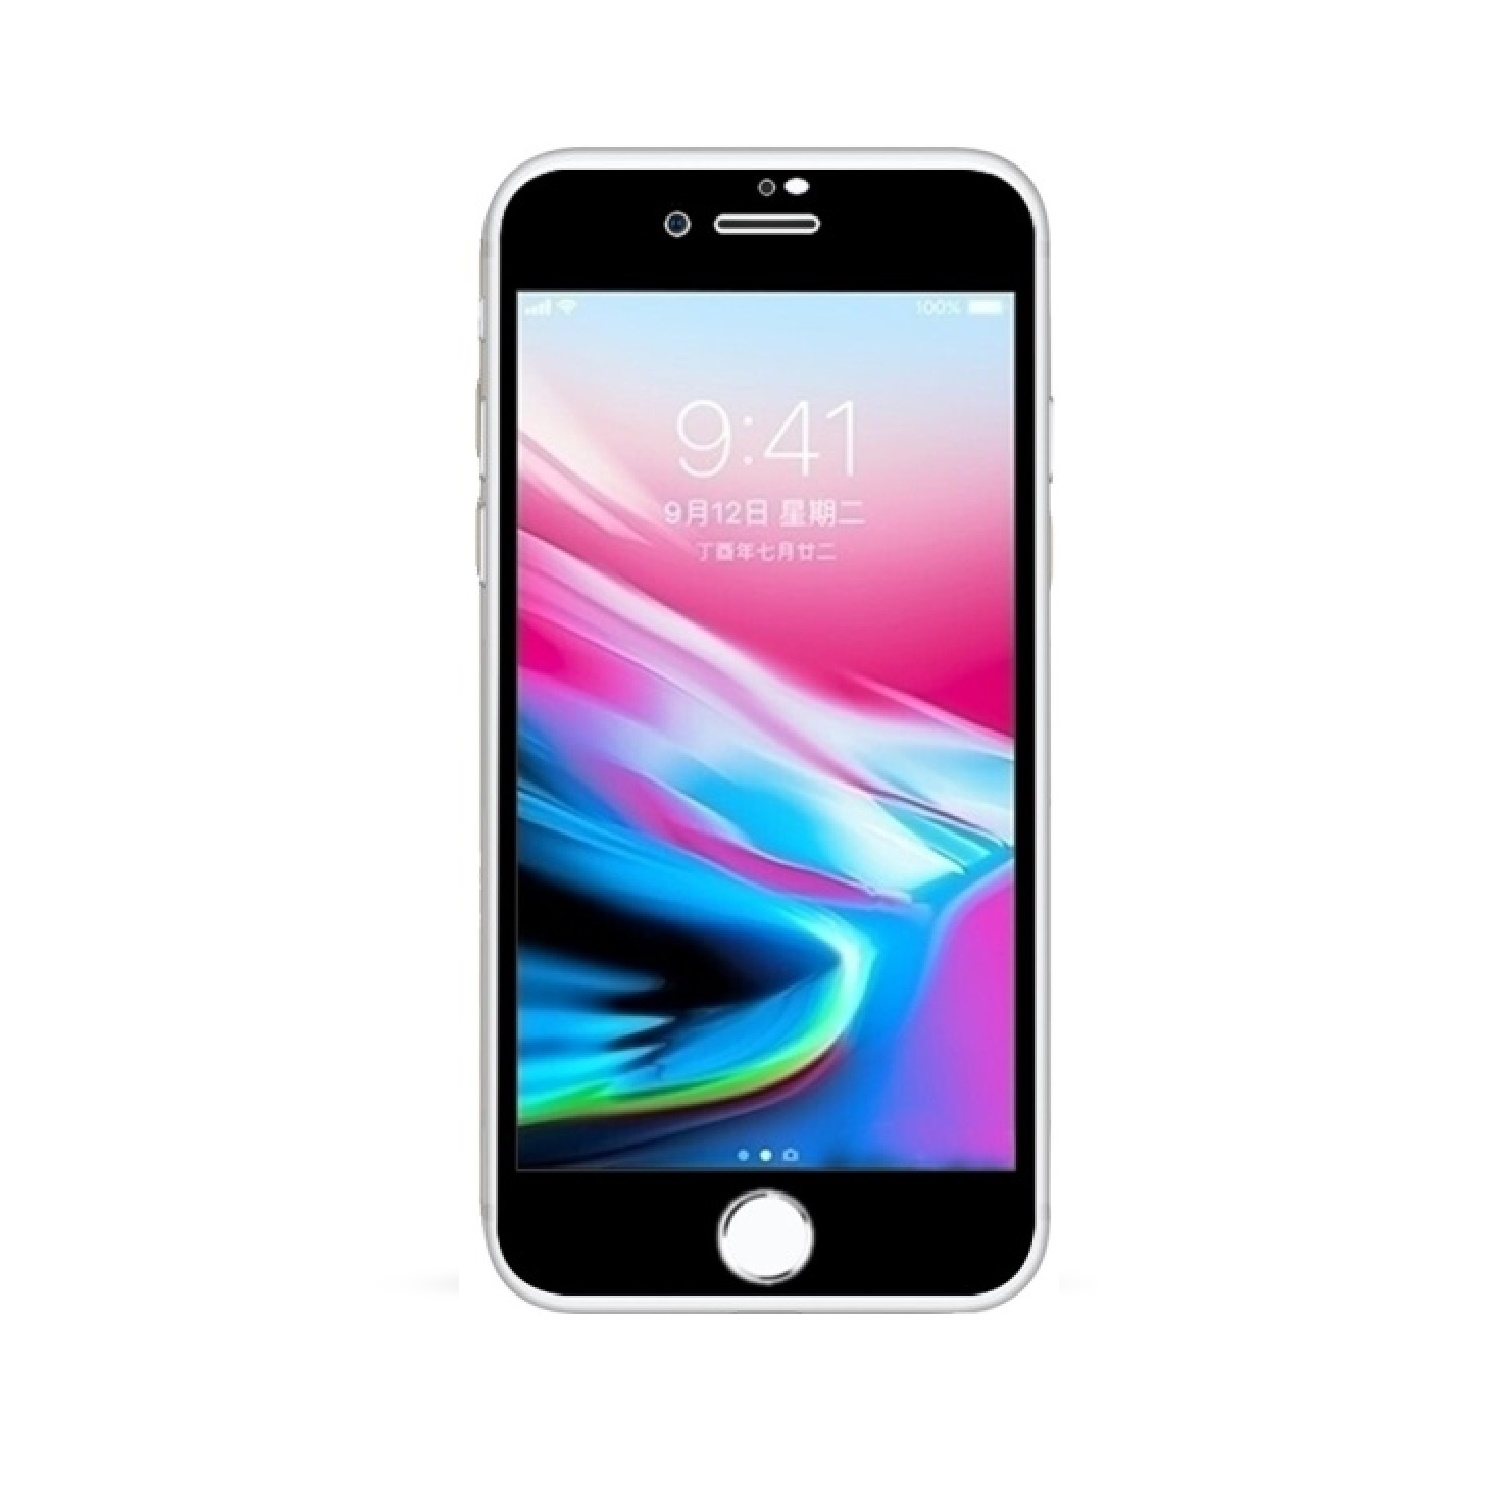 iPhone HD Apple 8) 9H Displayschutzfolie(für Hartglas KLAR 4x FULL PROTECTORKING COVER Schutzglas